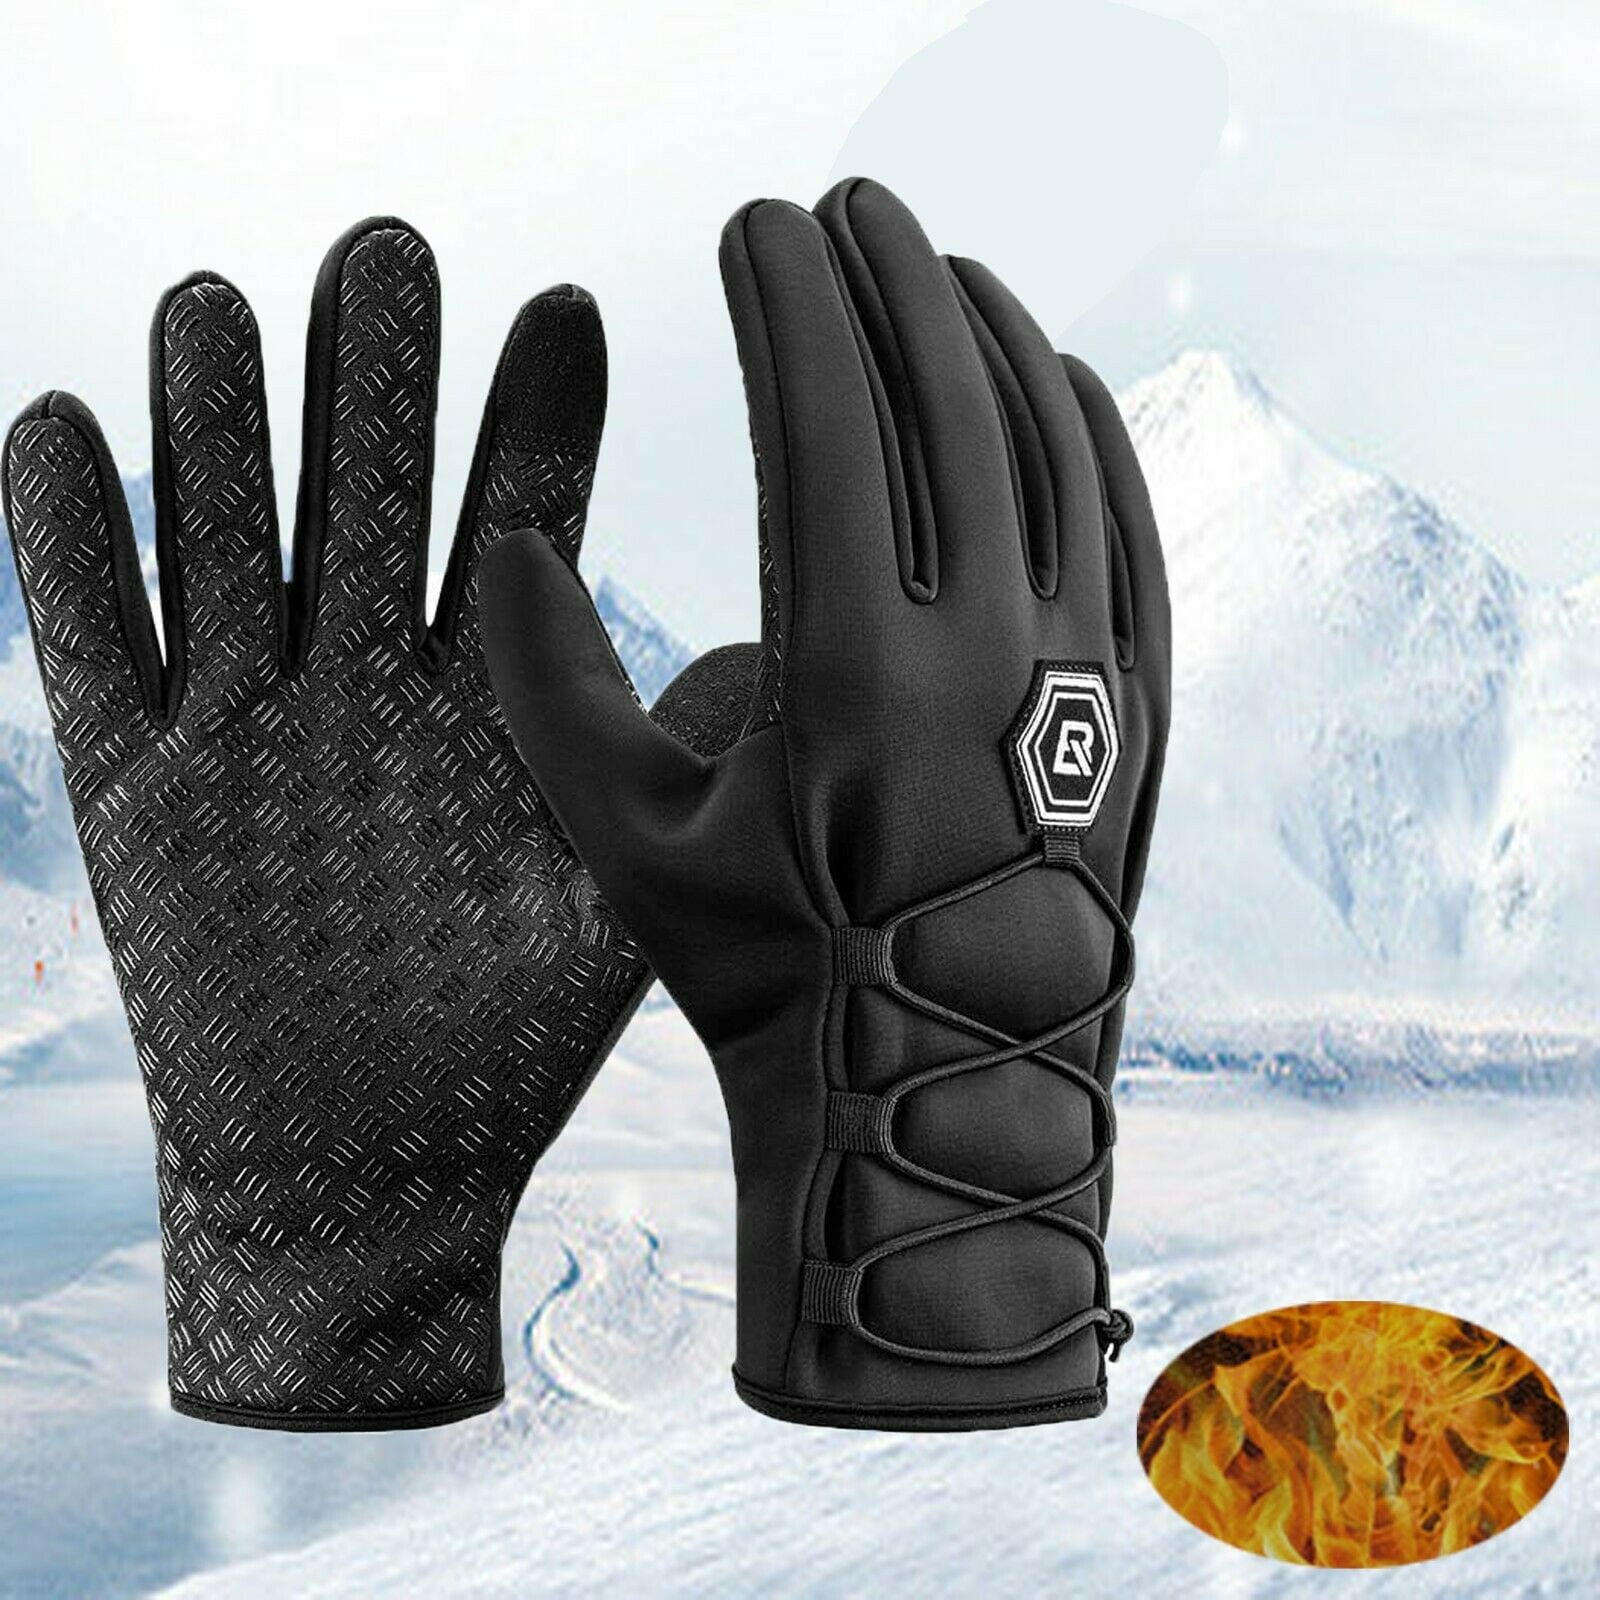 RockBros Winter Full Finger Fleece Thermal Warm Touch Screen Gloves Asian size 